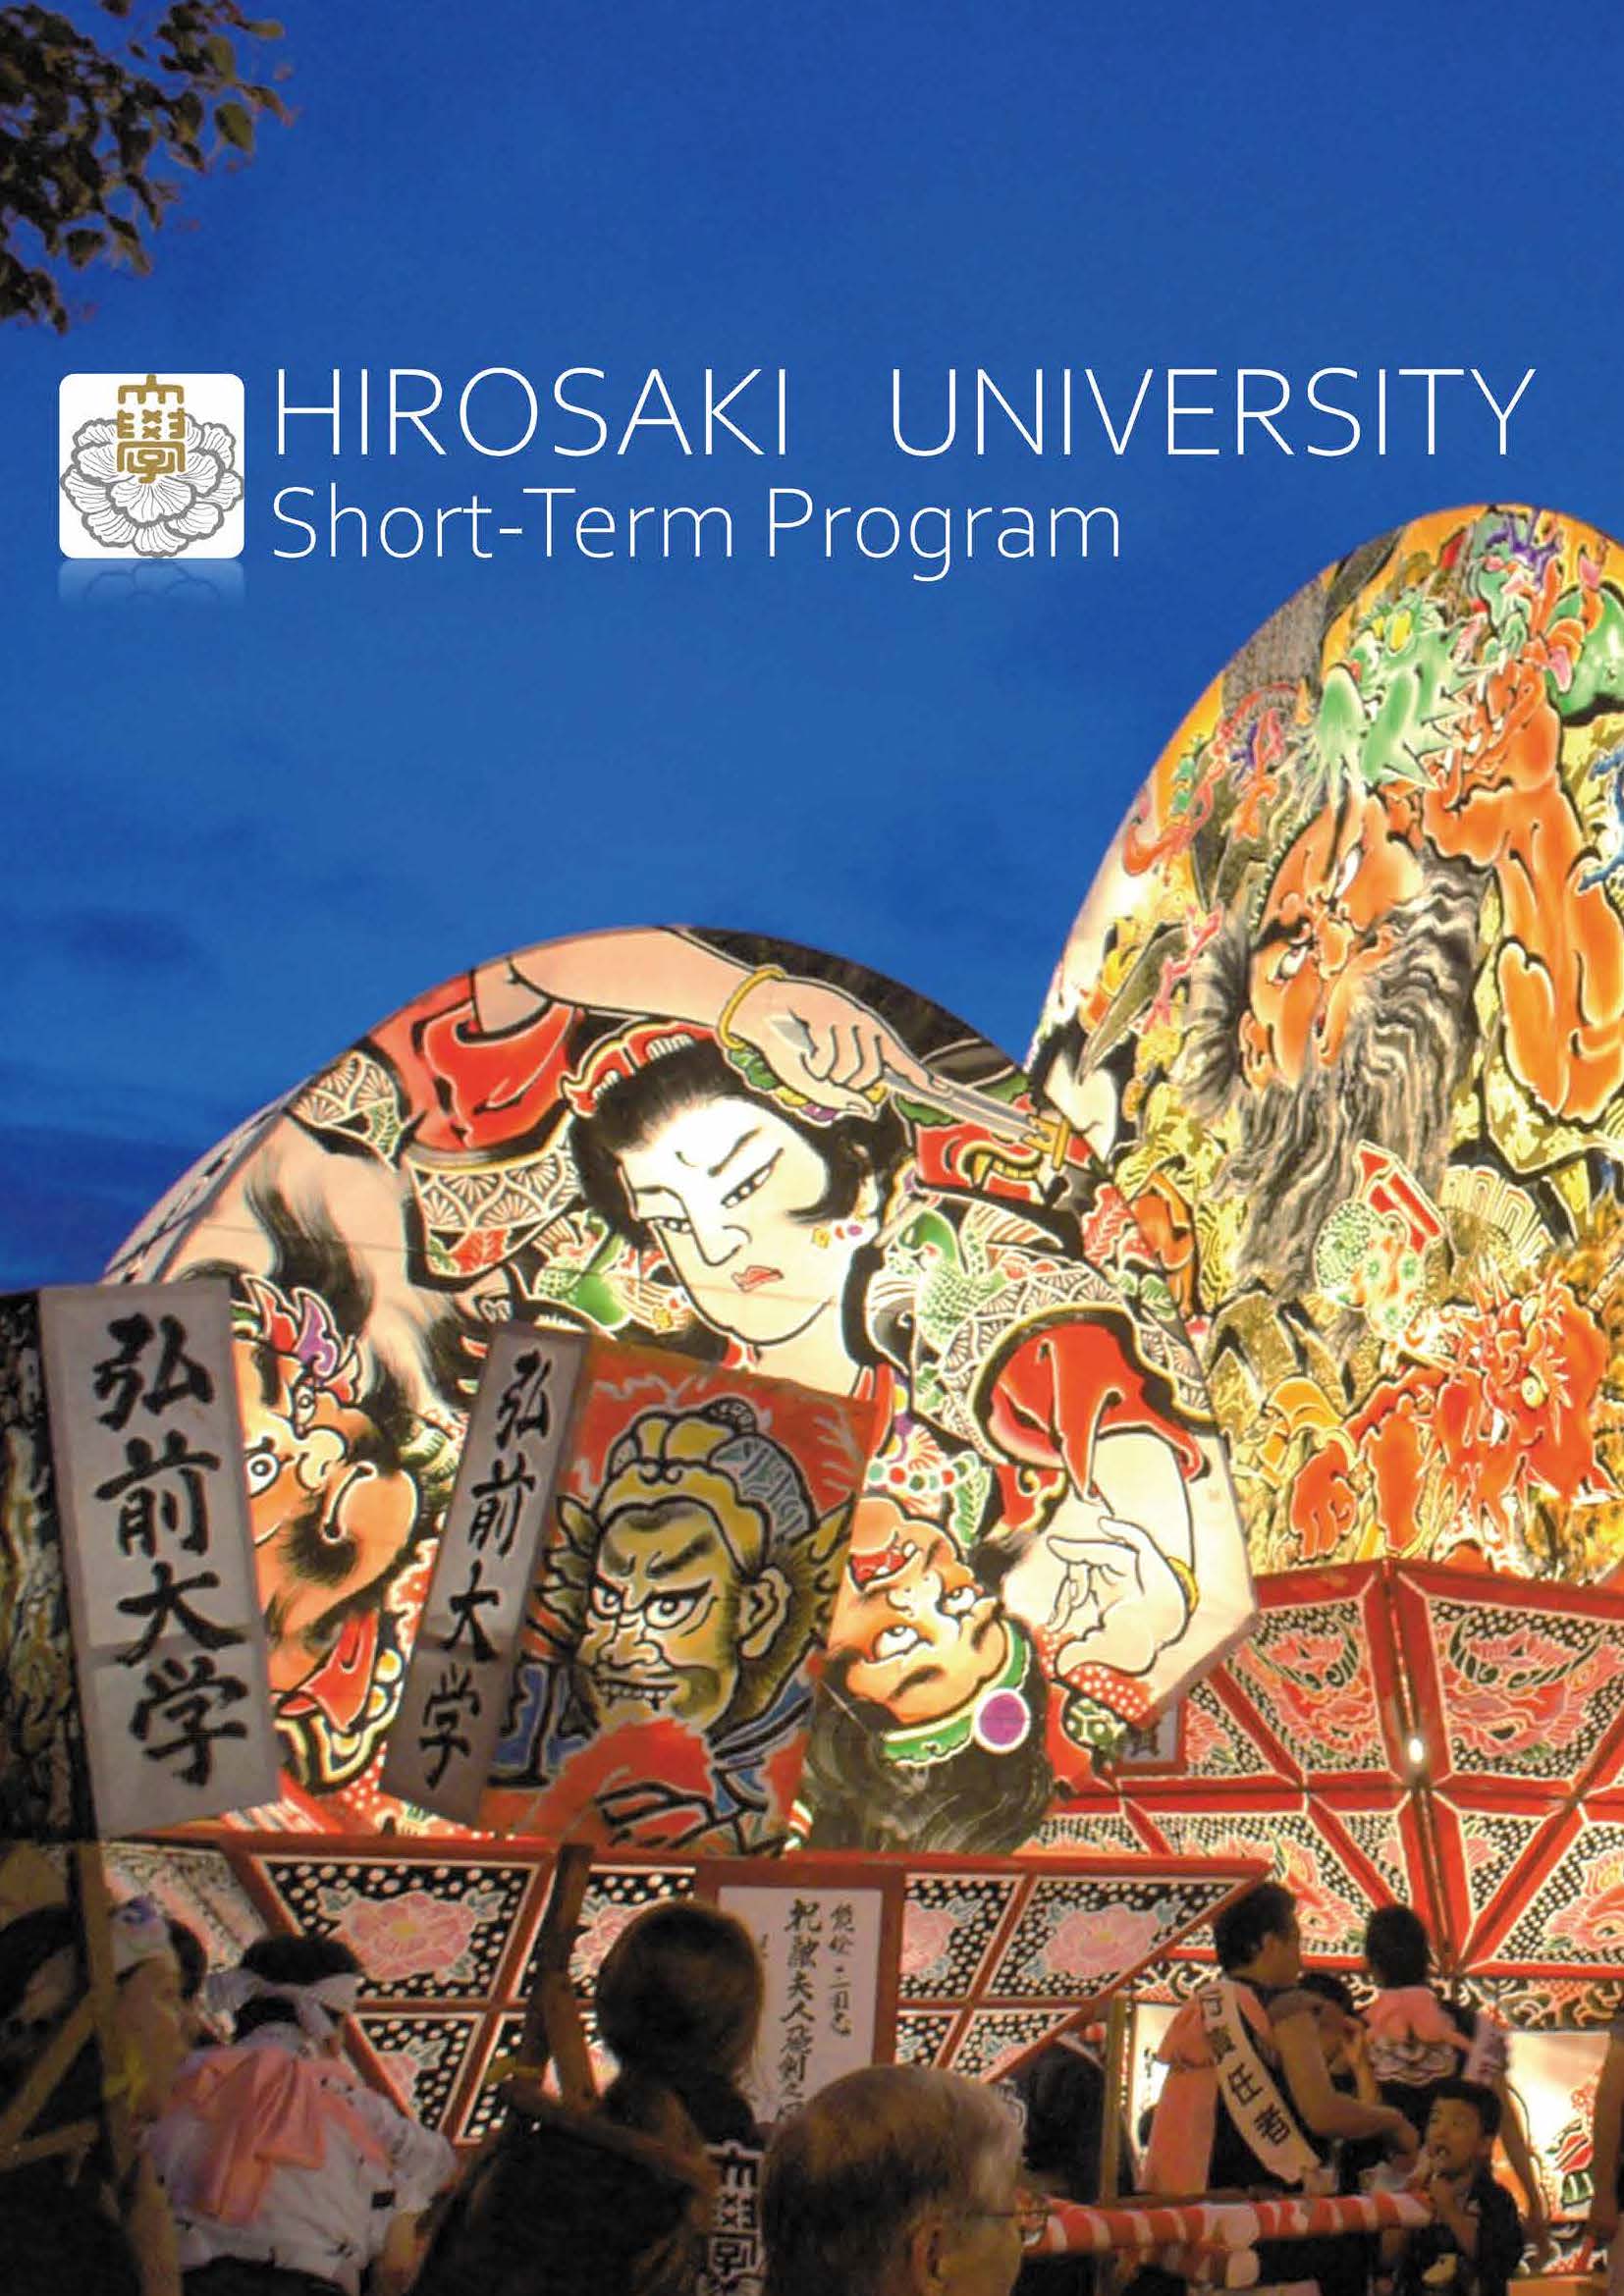 HIROSAKI UNIVERSITY Short-Term Program